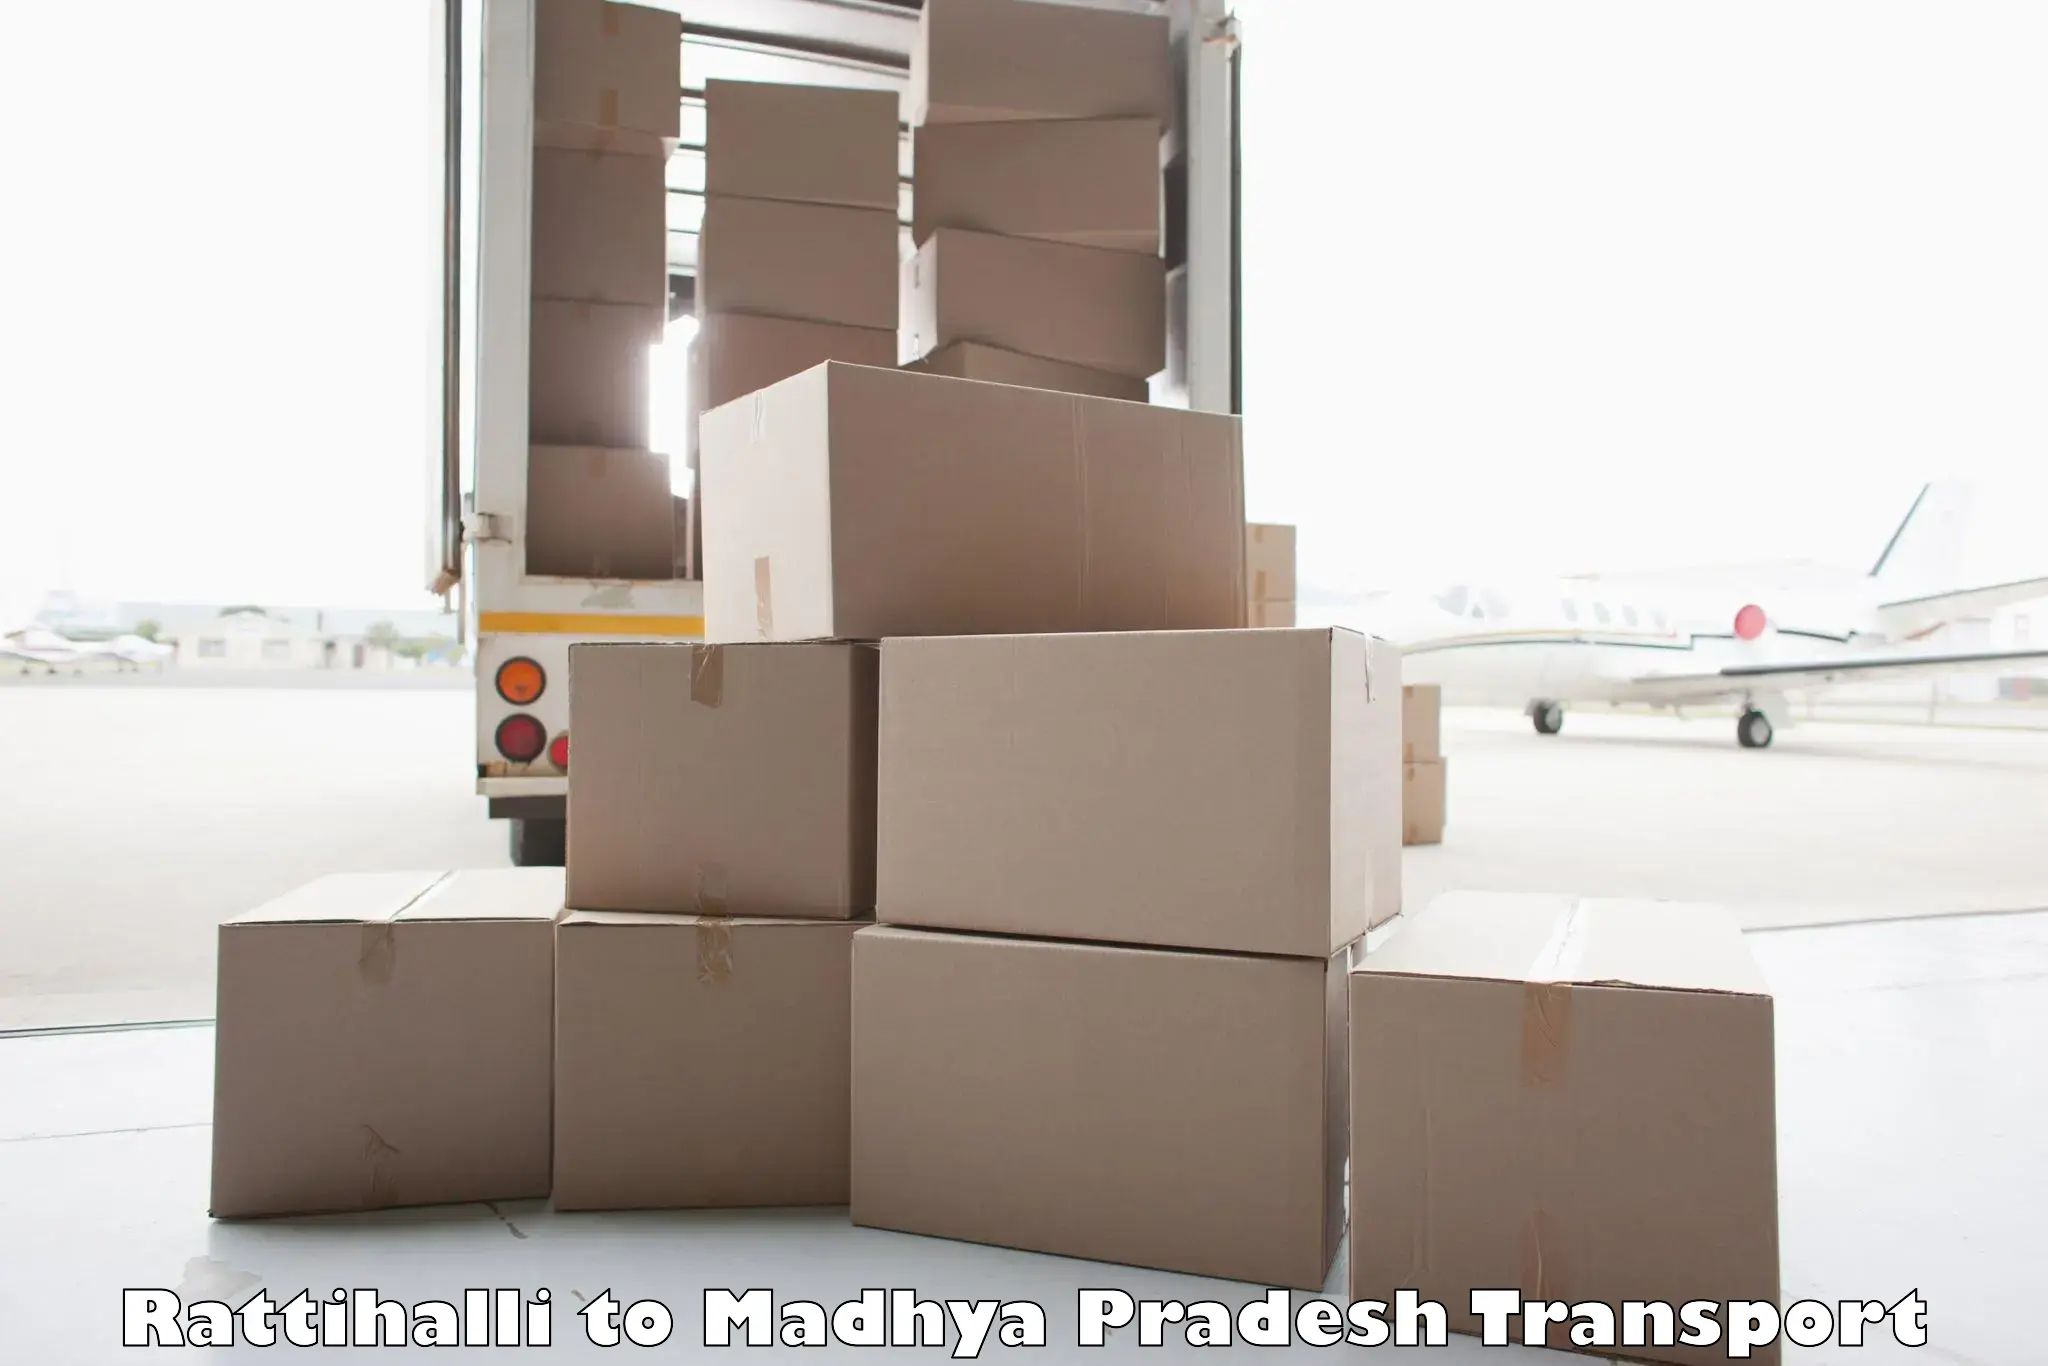 Container transport service Rattihalli to Jaora